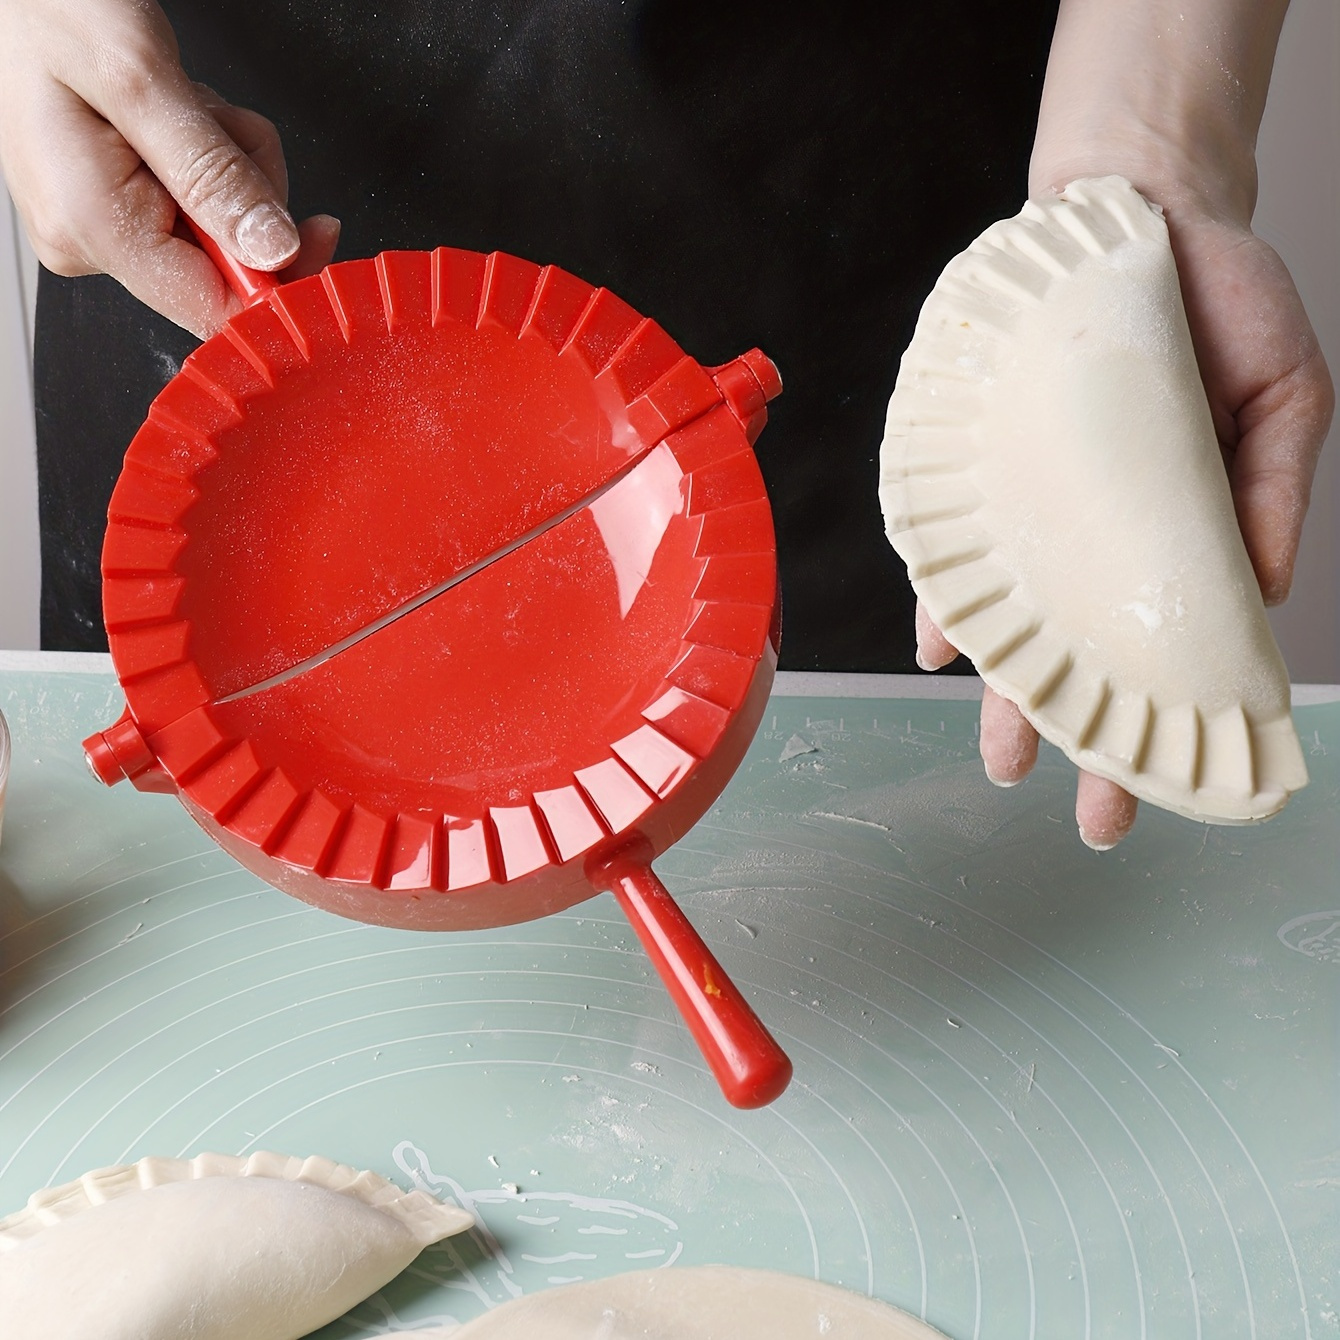 

1pc Dumpling Press Maker - Empanada Ravioli Mold, Pp Plastic Kitchen Gadget, Manual Dumpling Wrapper Cutter, No Electricity Needed, Home Kitchen Accessory